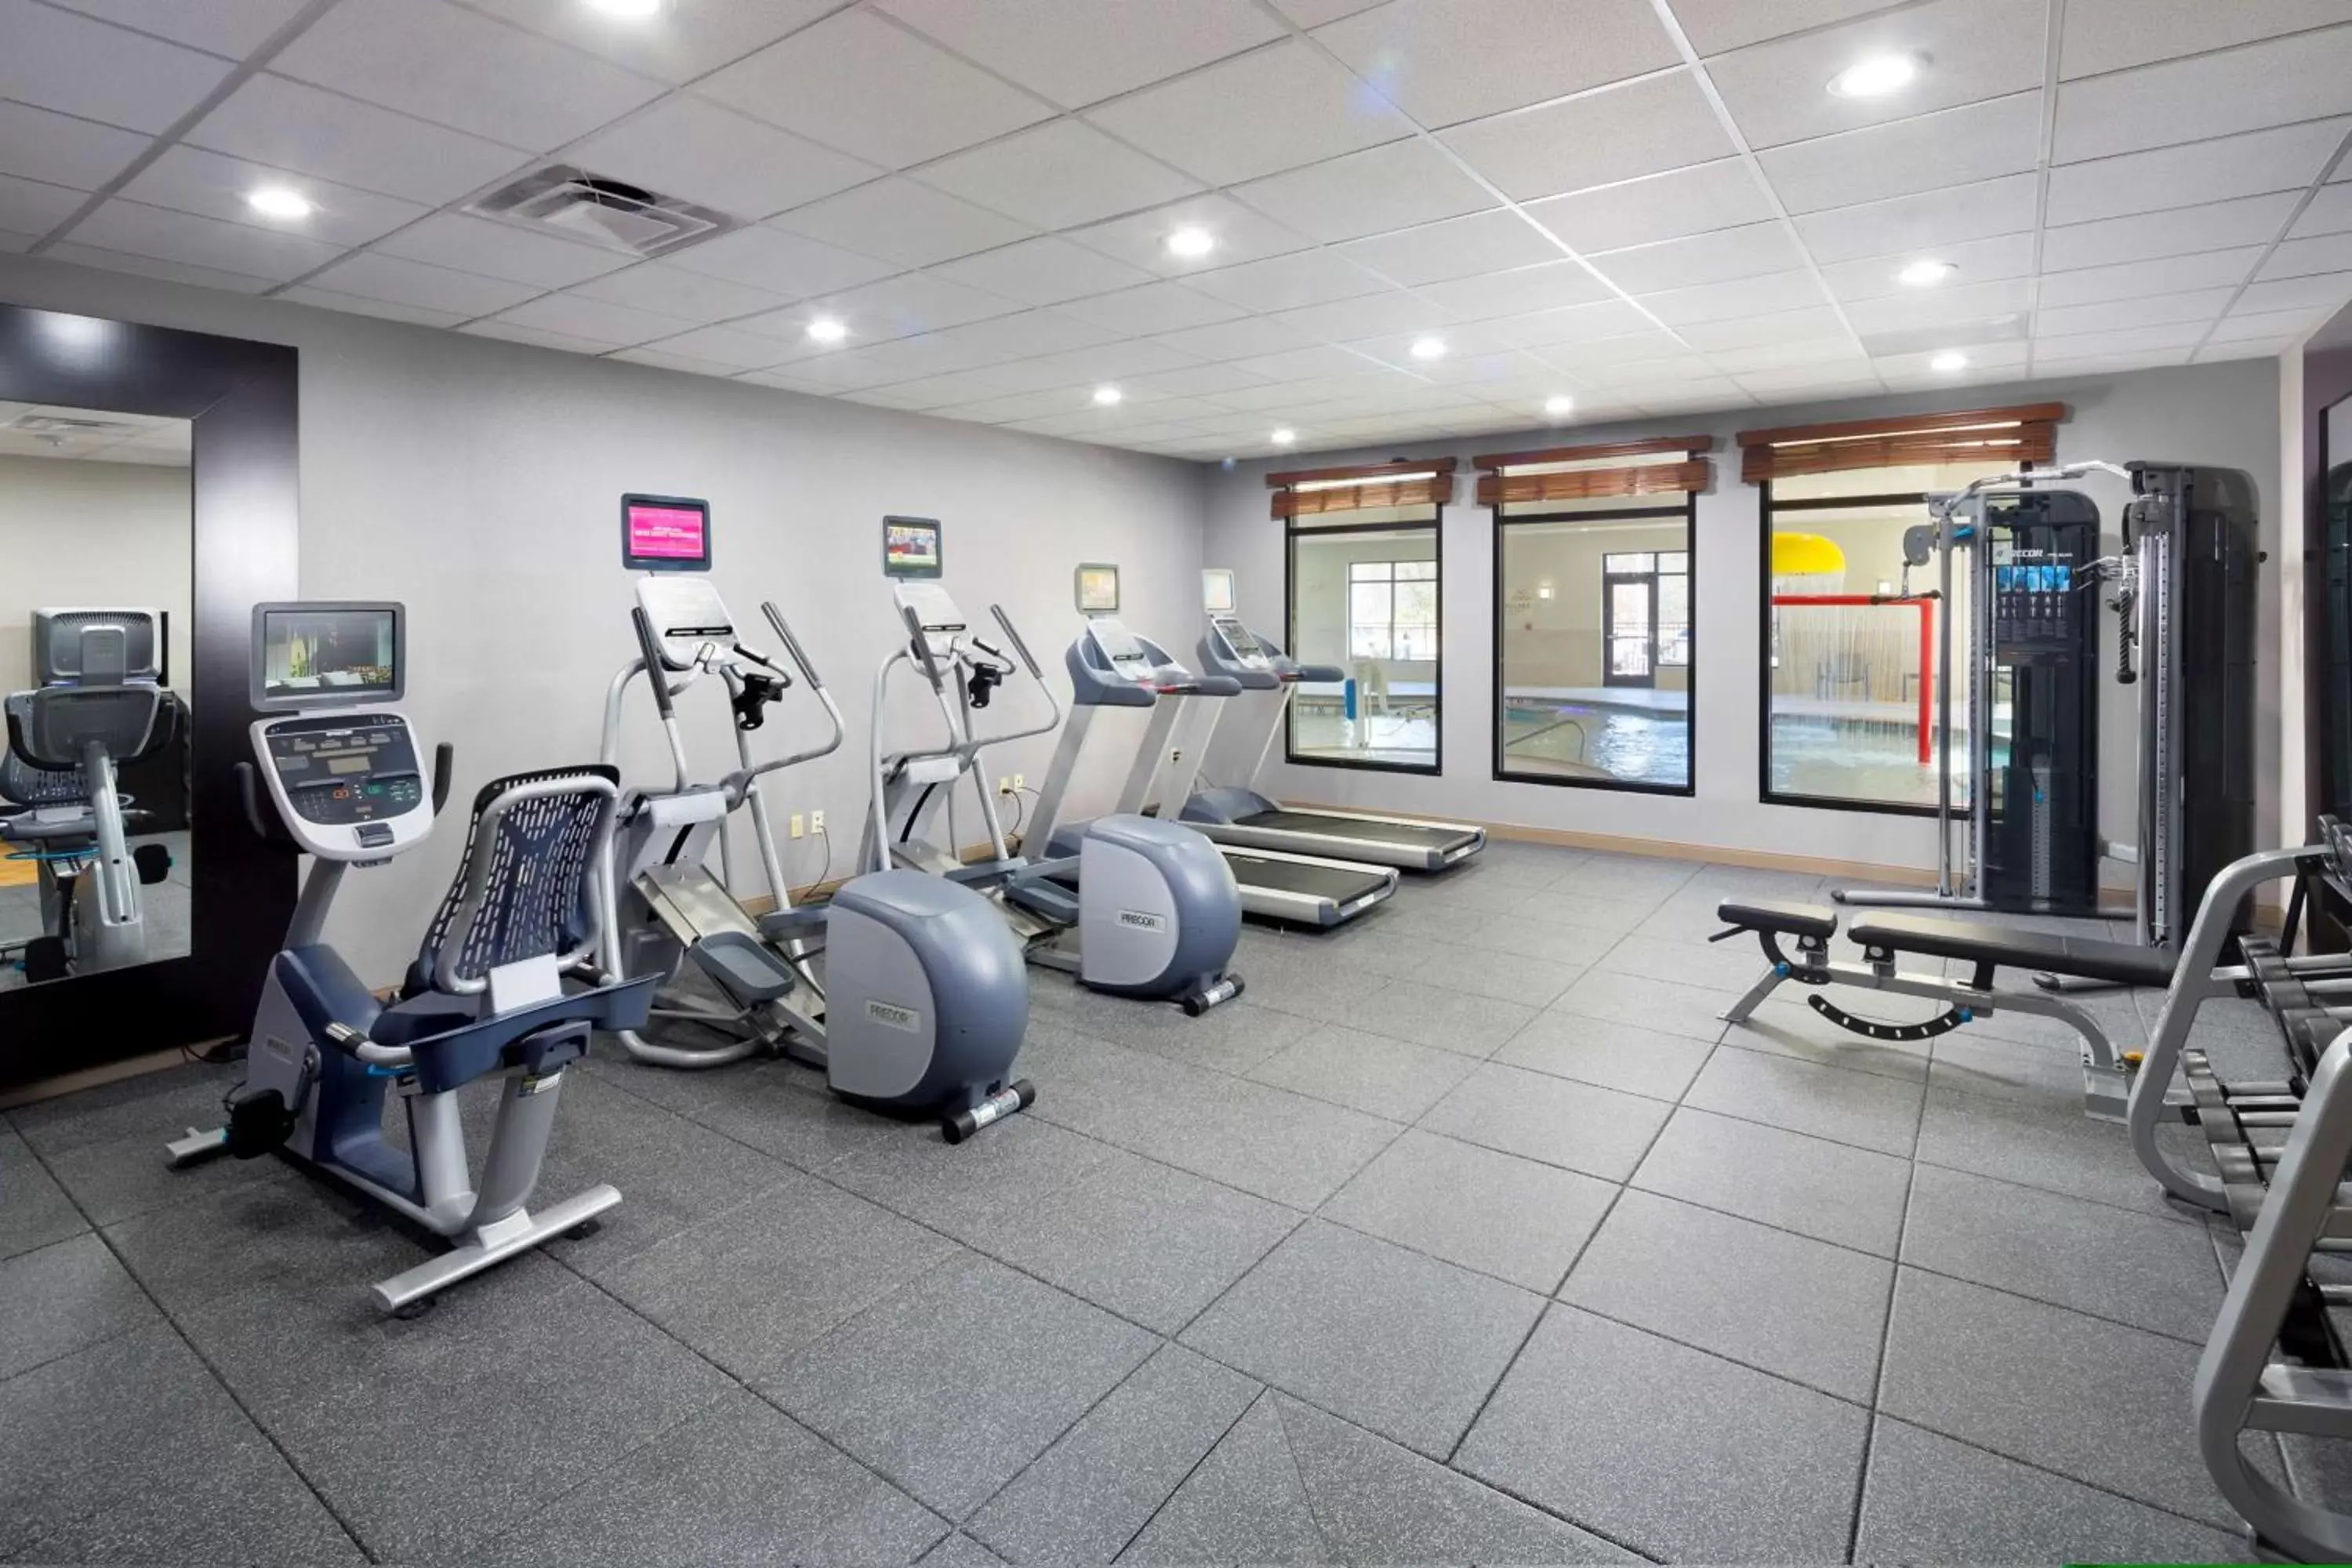 Fitness centre/facilities, Fitness Center/Facilities in Longview Hilton Garden Inn